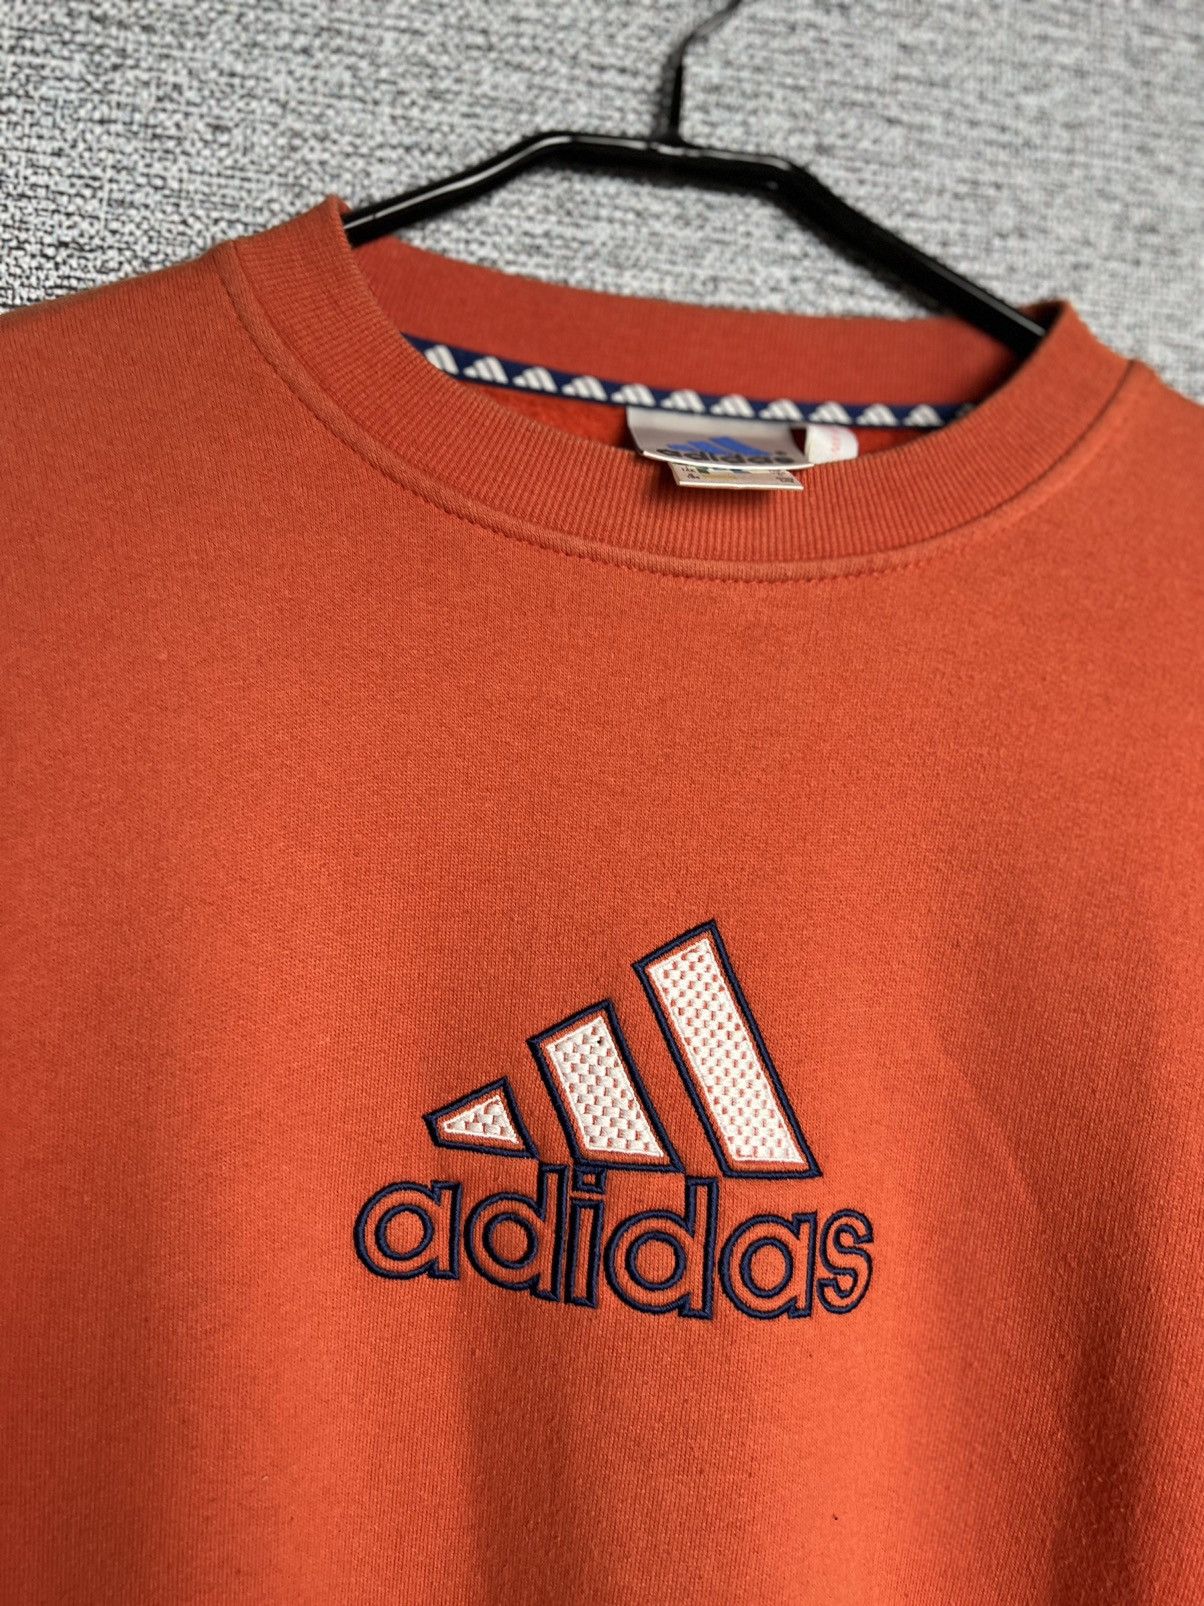 Adidas Adidas vintage sweatshirt 🔥 Size US S / EU 44-46 / 1 - 3 Thumbnail